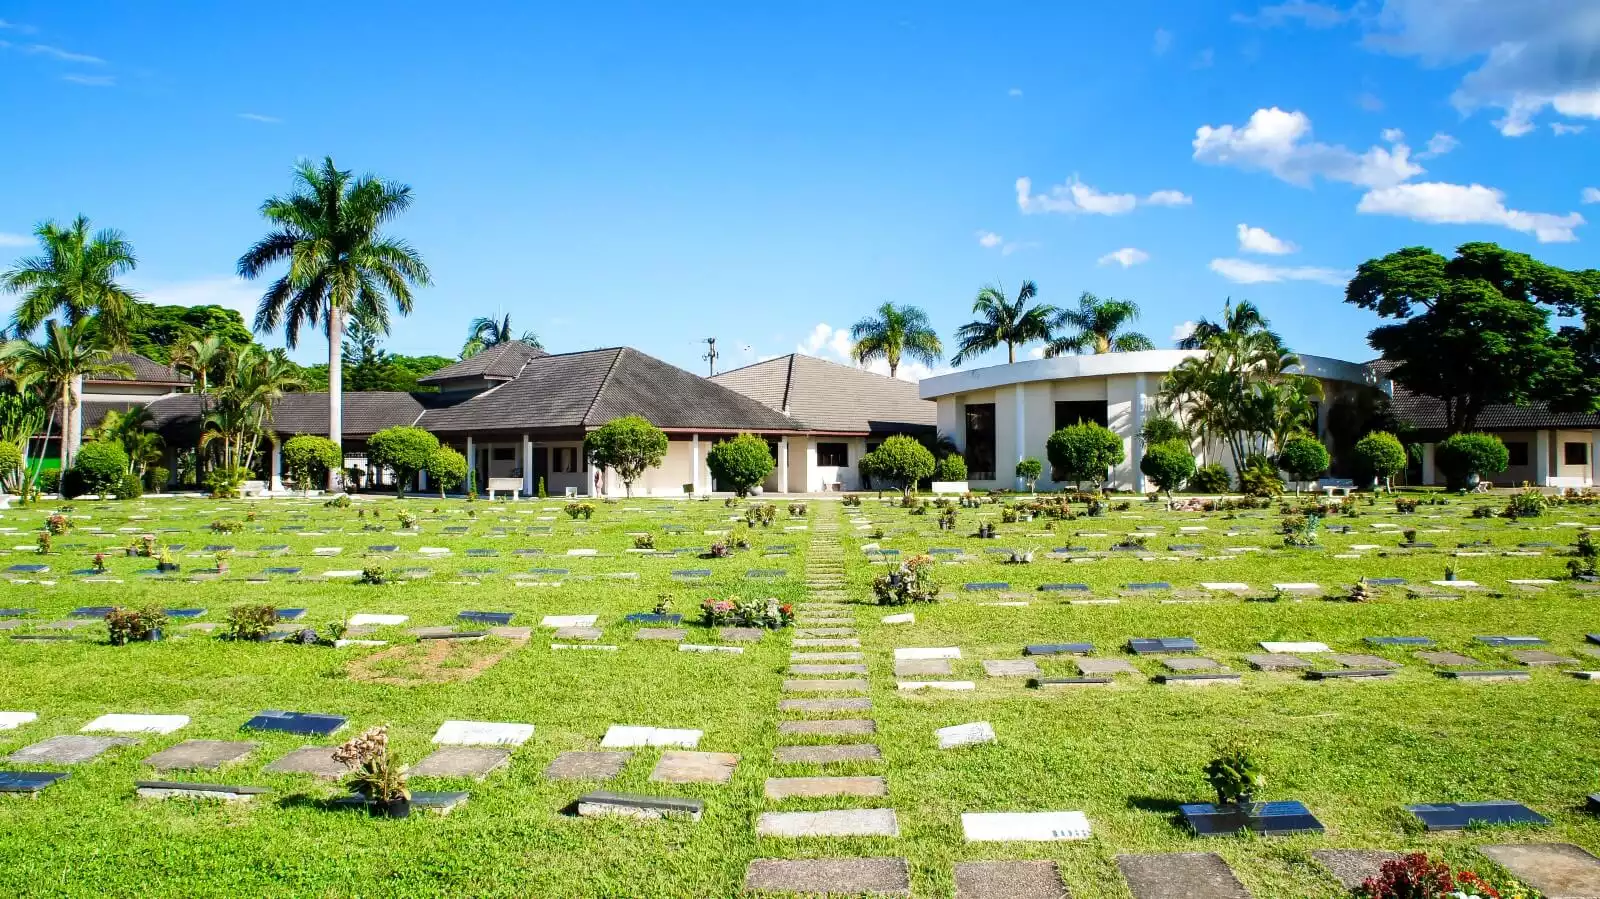 Cemitério Parque das Flores